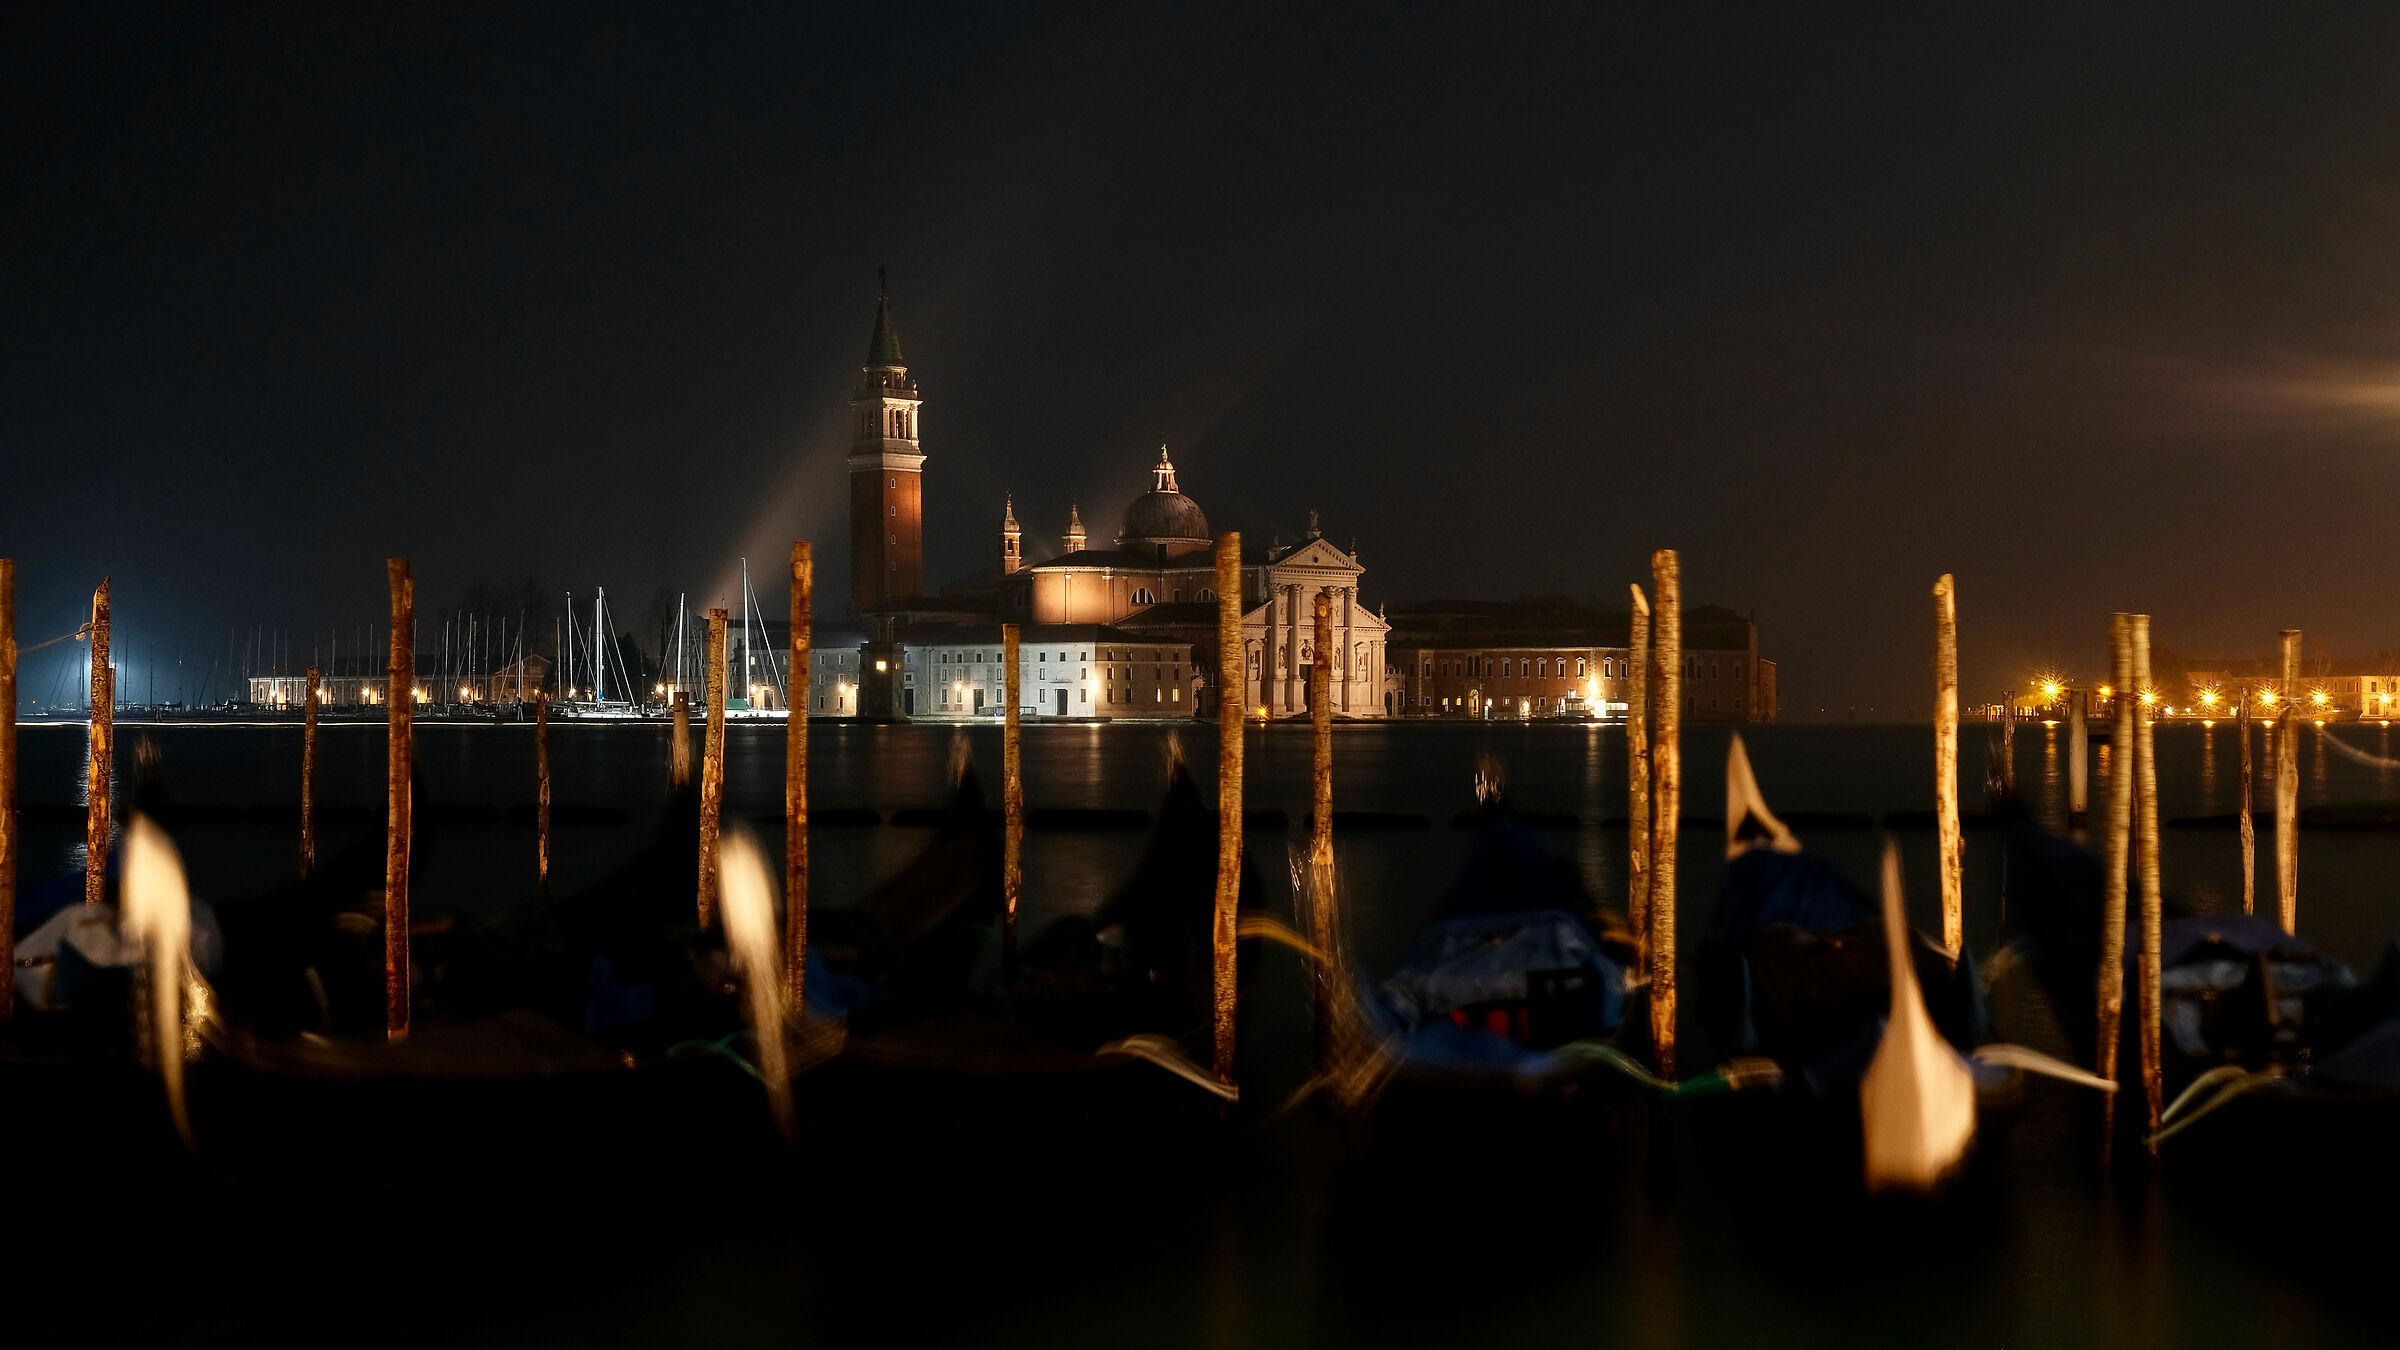 Venice Night - Yet another interpretation...